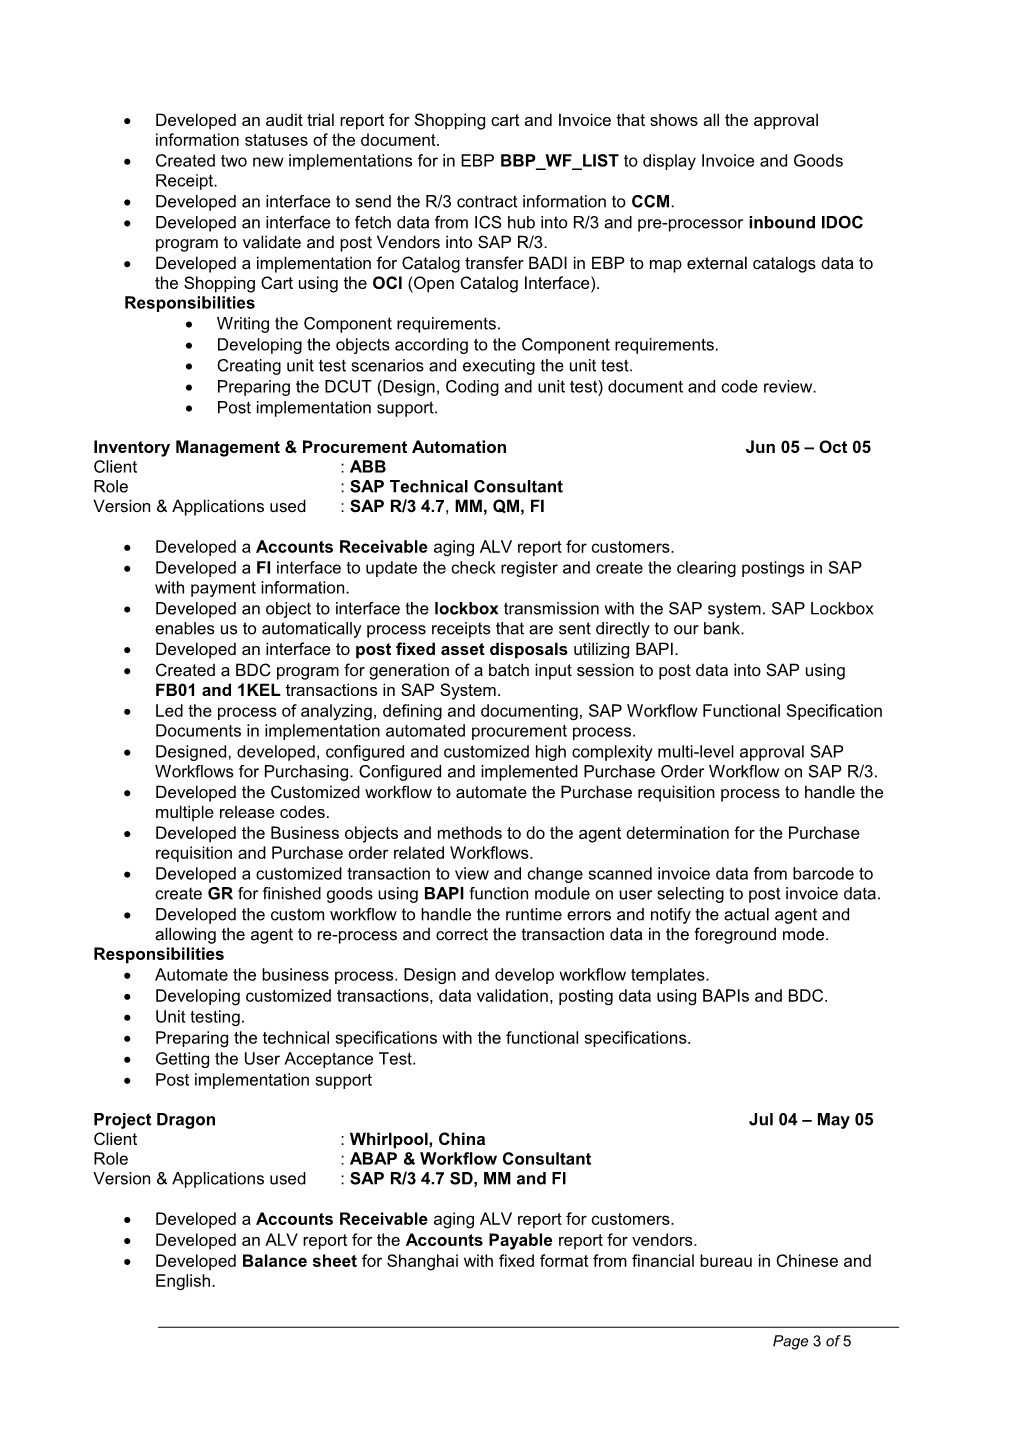 Sample Employee Resume